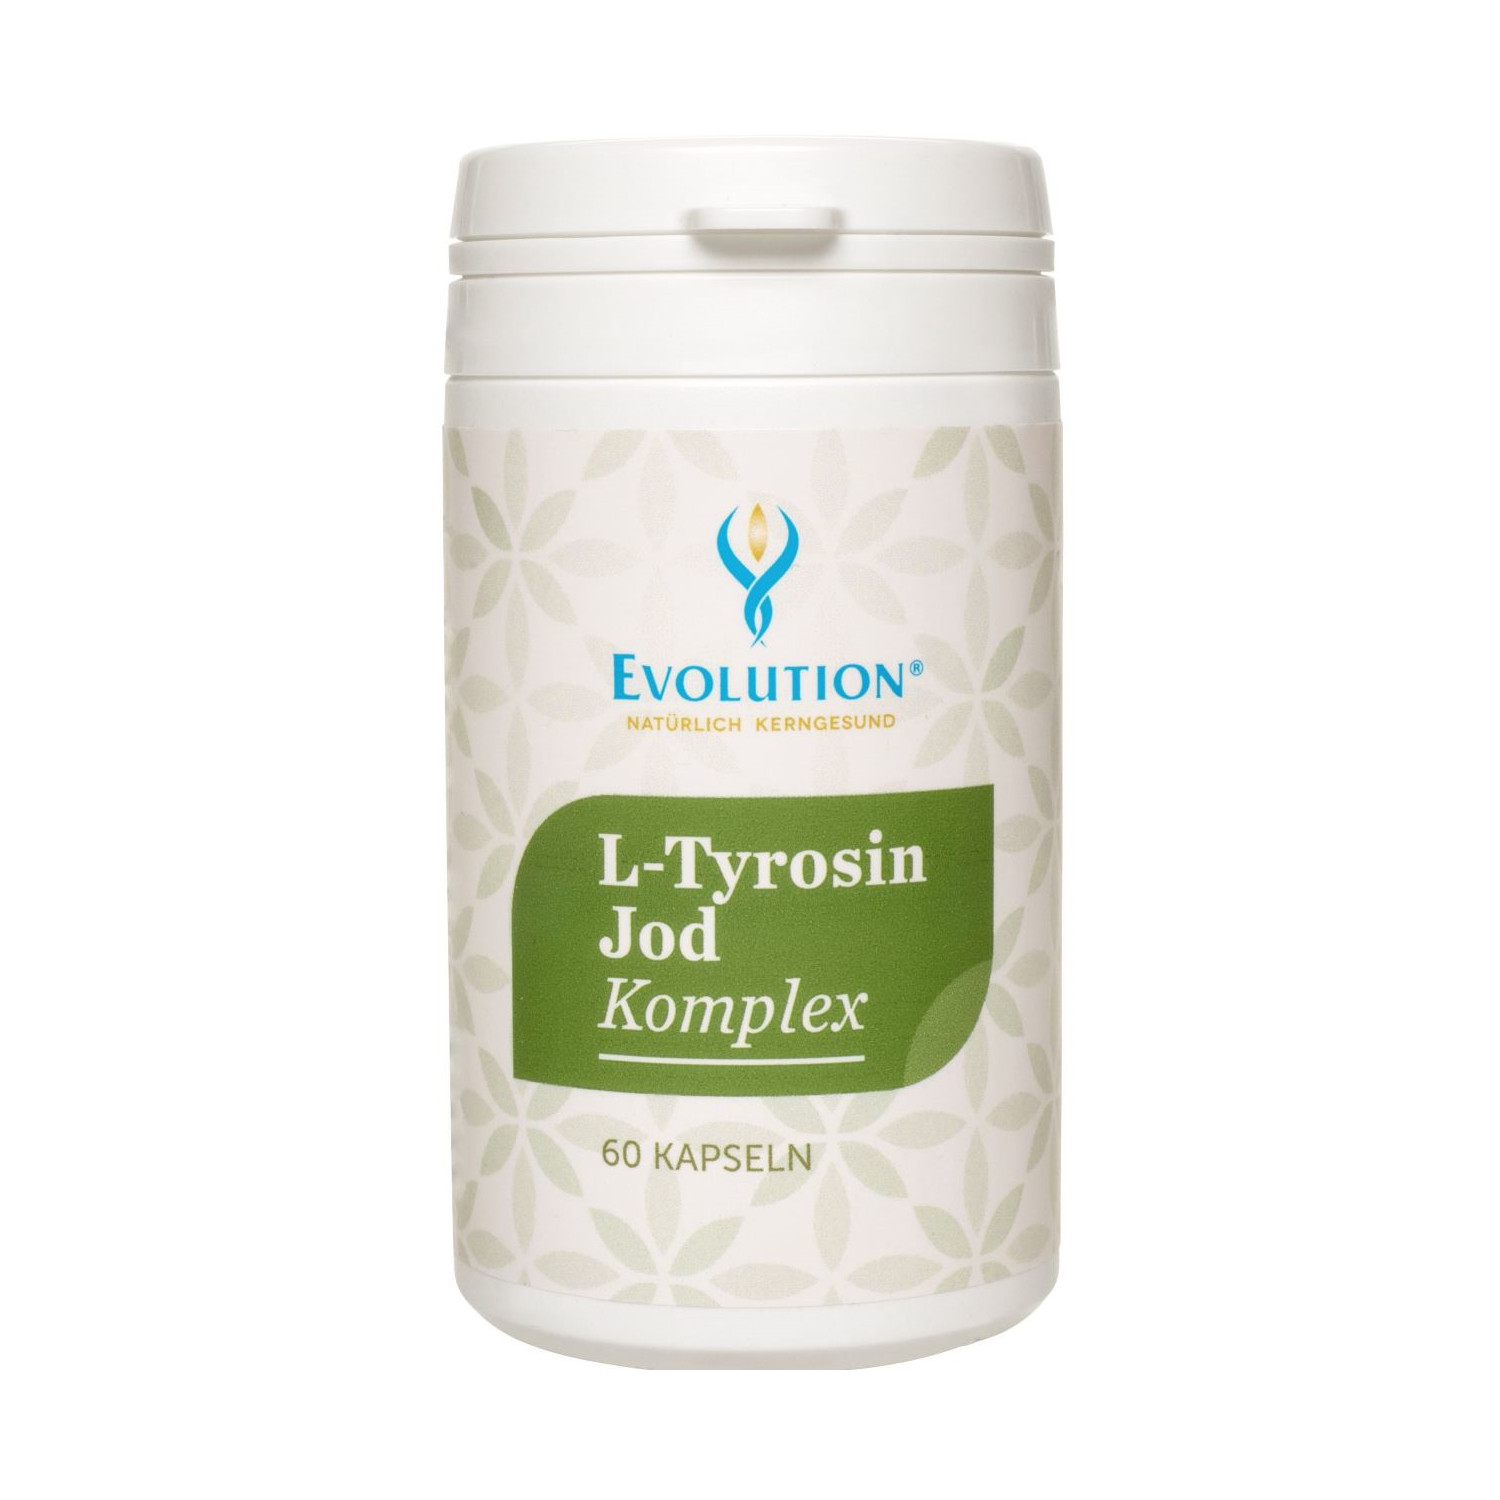 L-TYROSIN JOD KOMPLEX (60 rastlinných kapsulí)